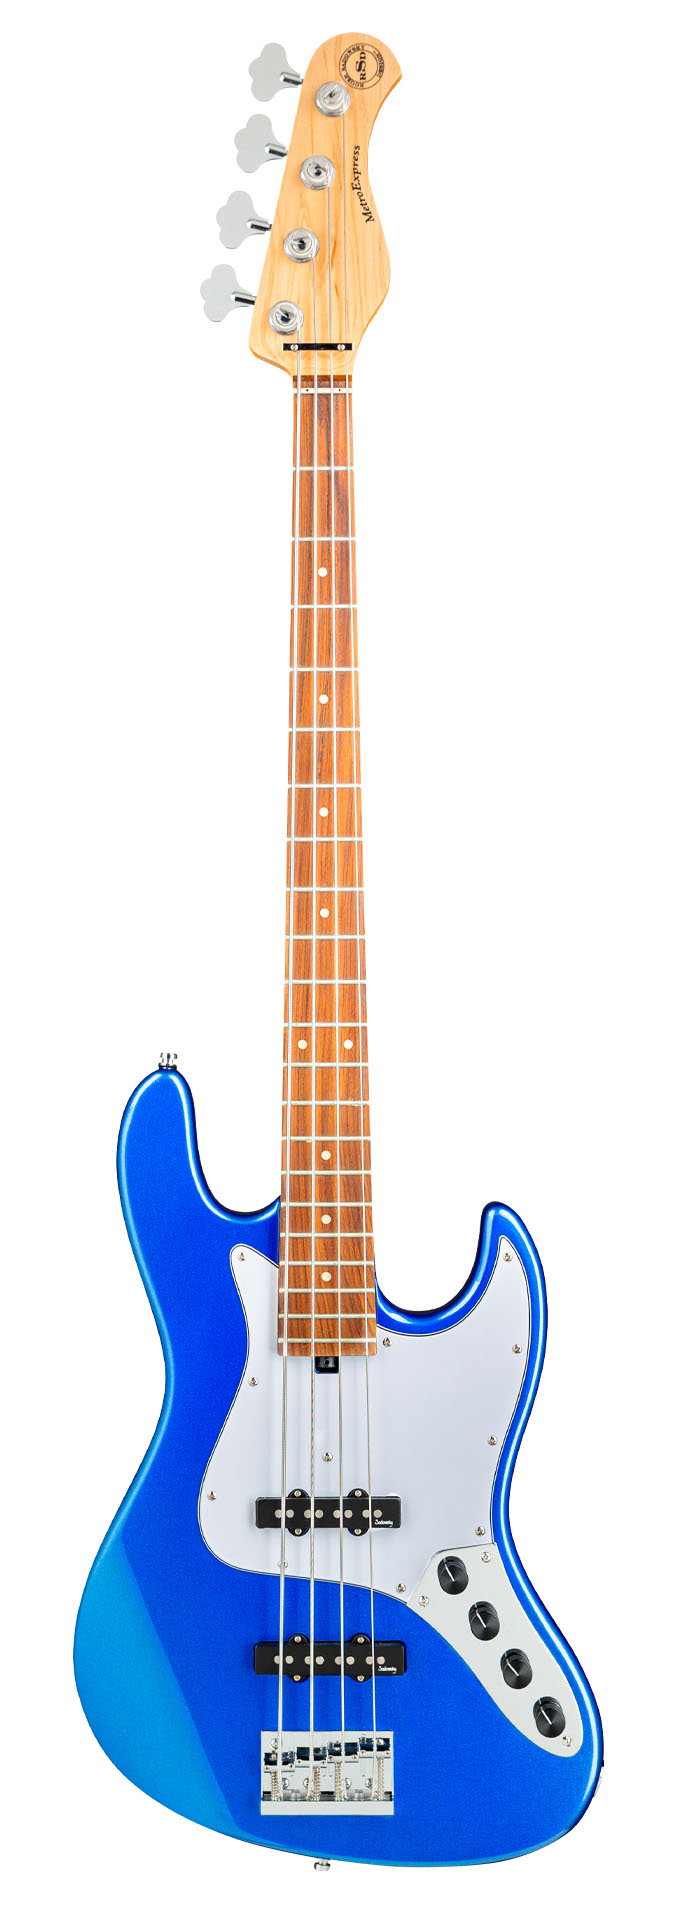 Sadowsky MetroExpress 21-Fret Vintage J/J Bass, Morado Fingerboard, 4-String - Solid Ocean Blue Metallic High Polish